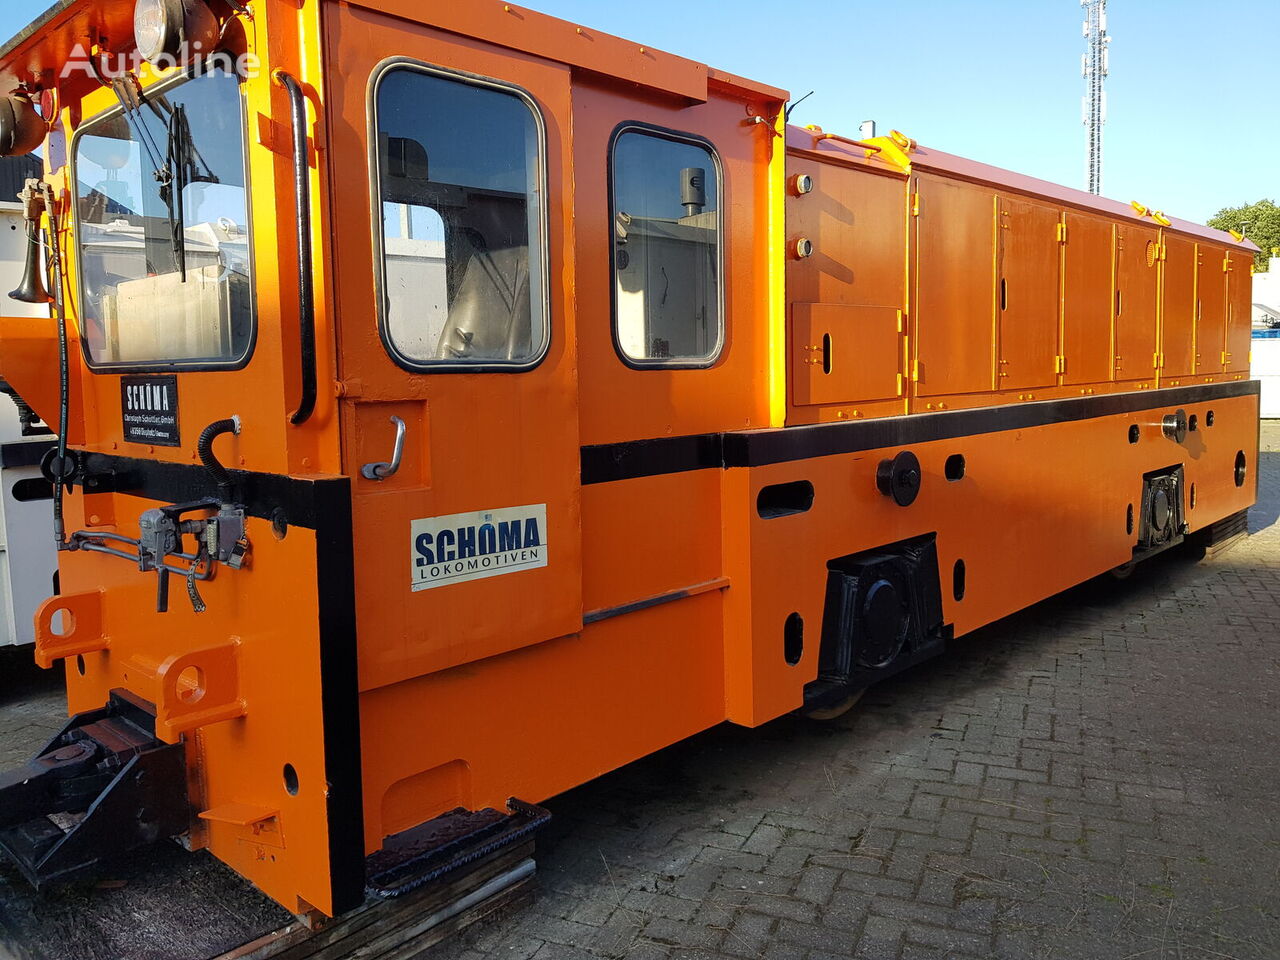 Deutz Schoema CFL 200 DCL 40 ton    Lokomotive